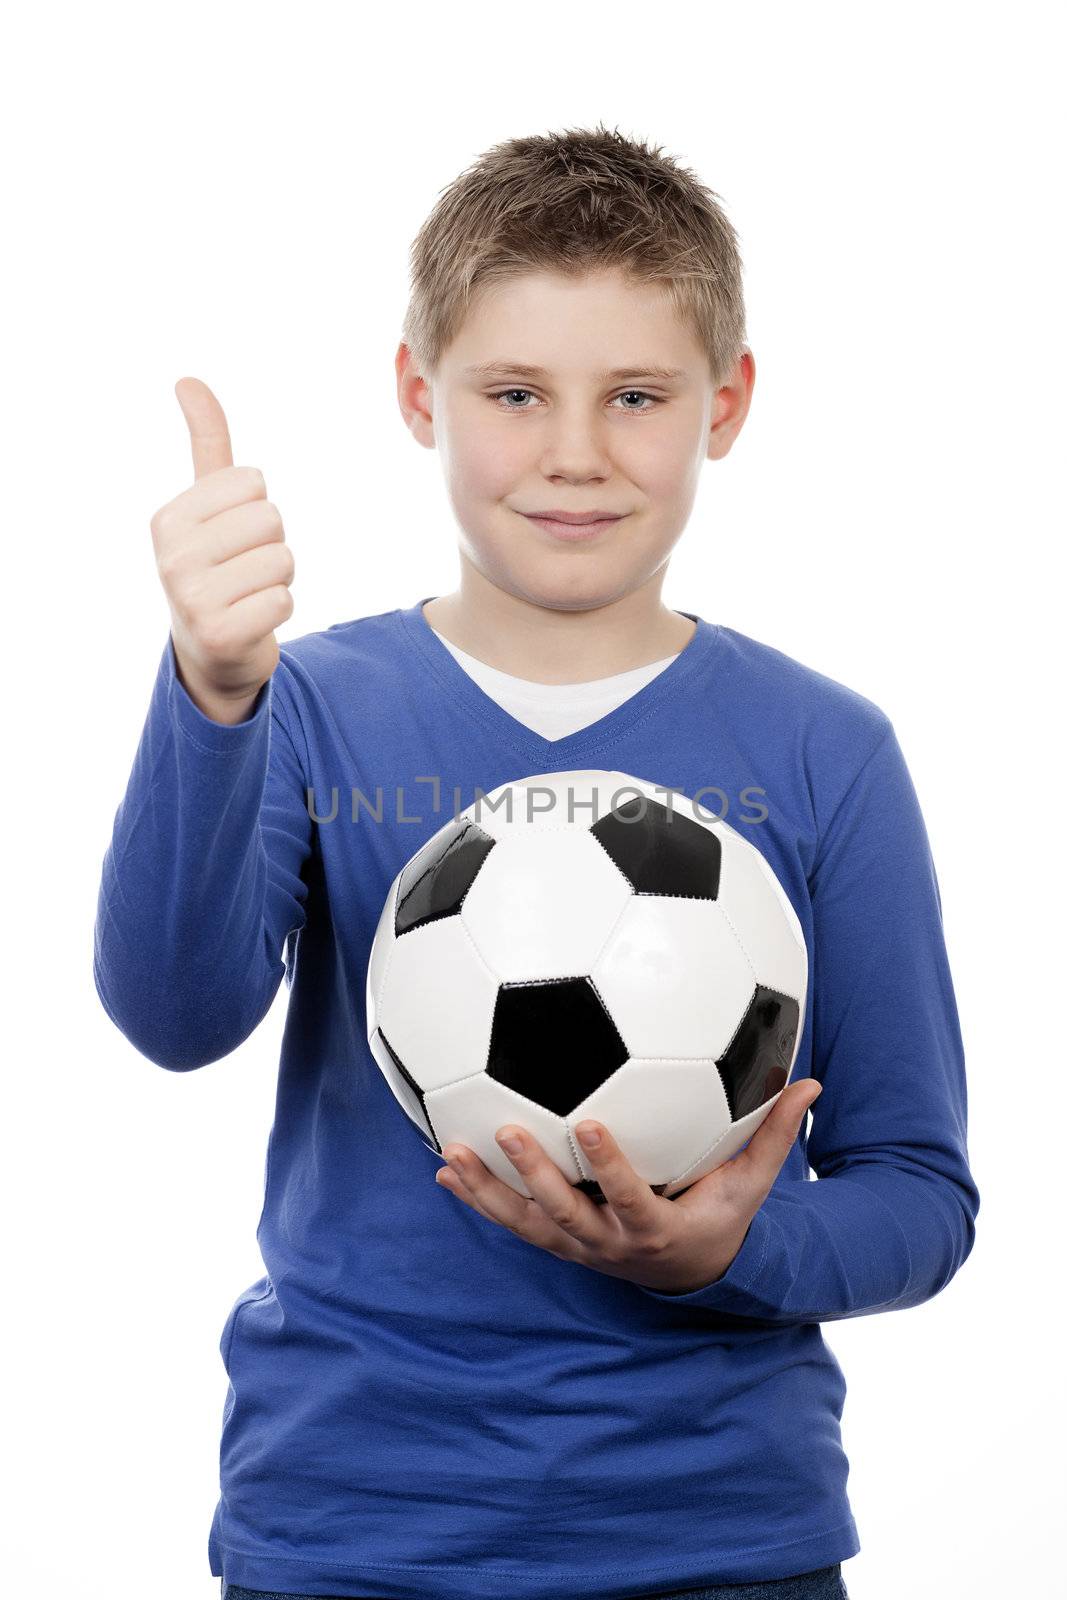 Cute young boy holding a football ball